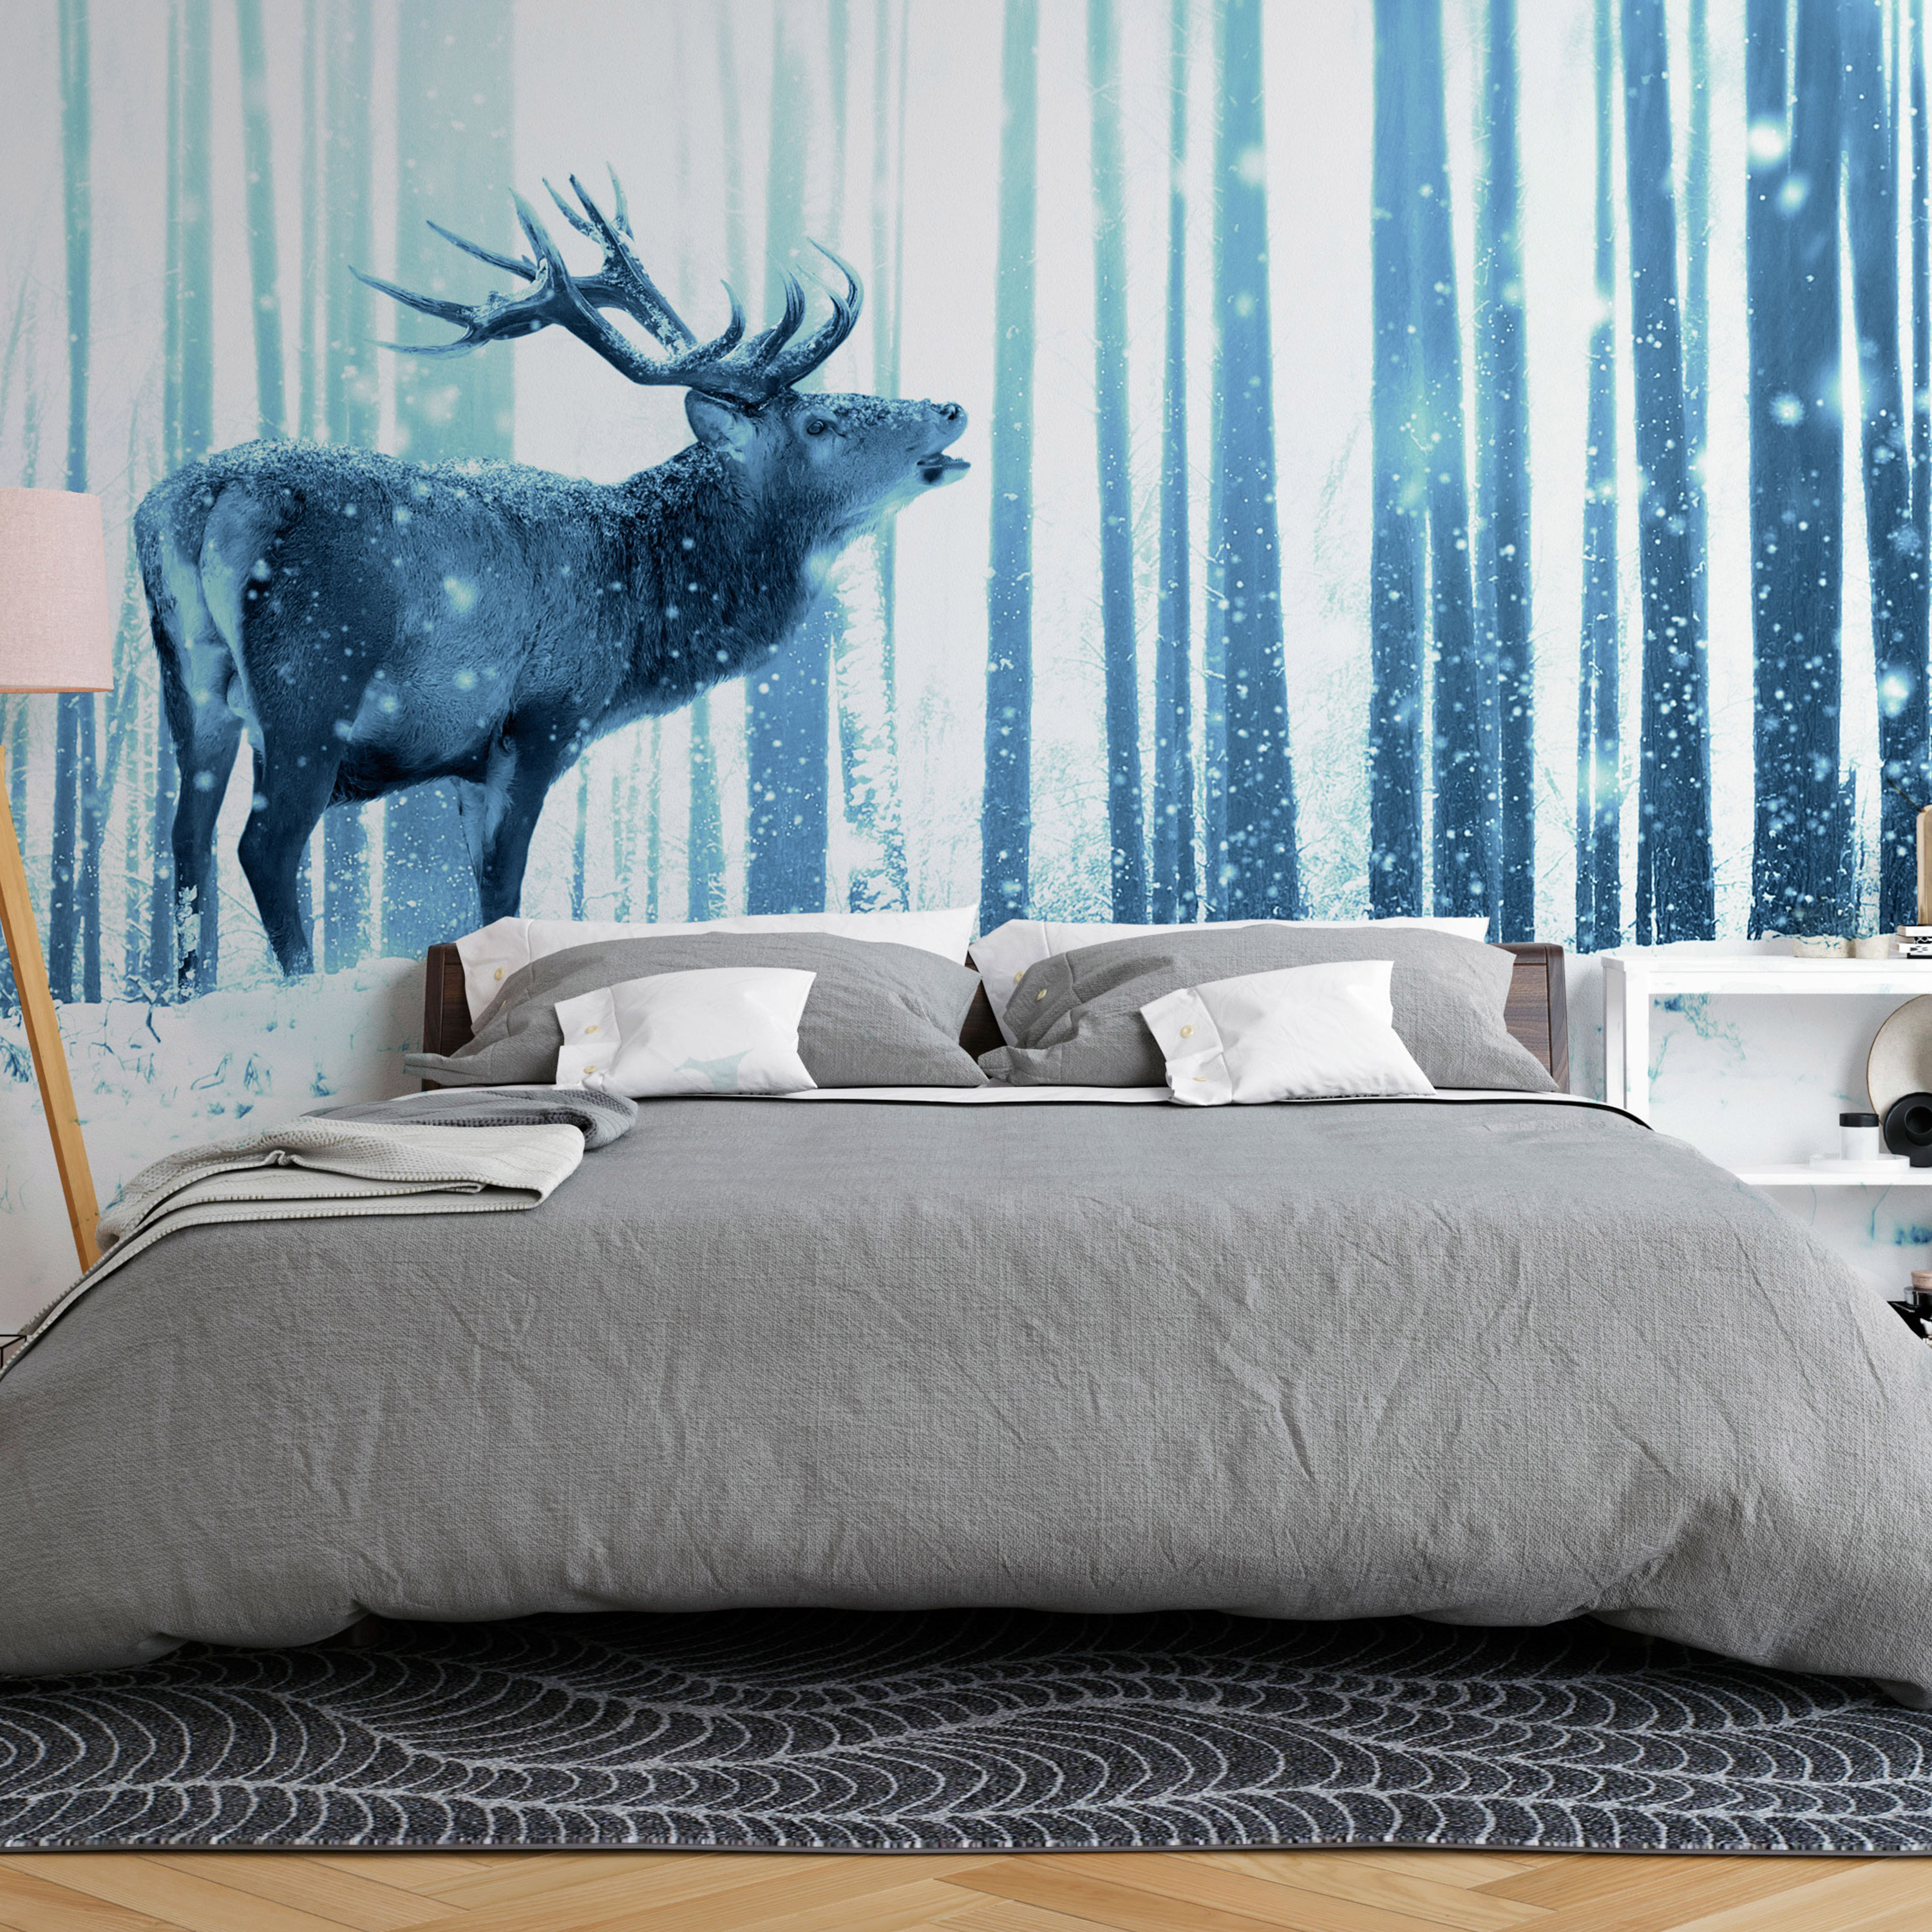 Wallpaper - Deer in the Snow (Blue) - 150x105